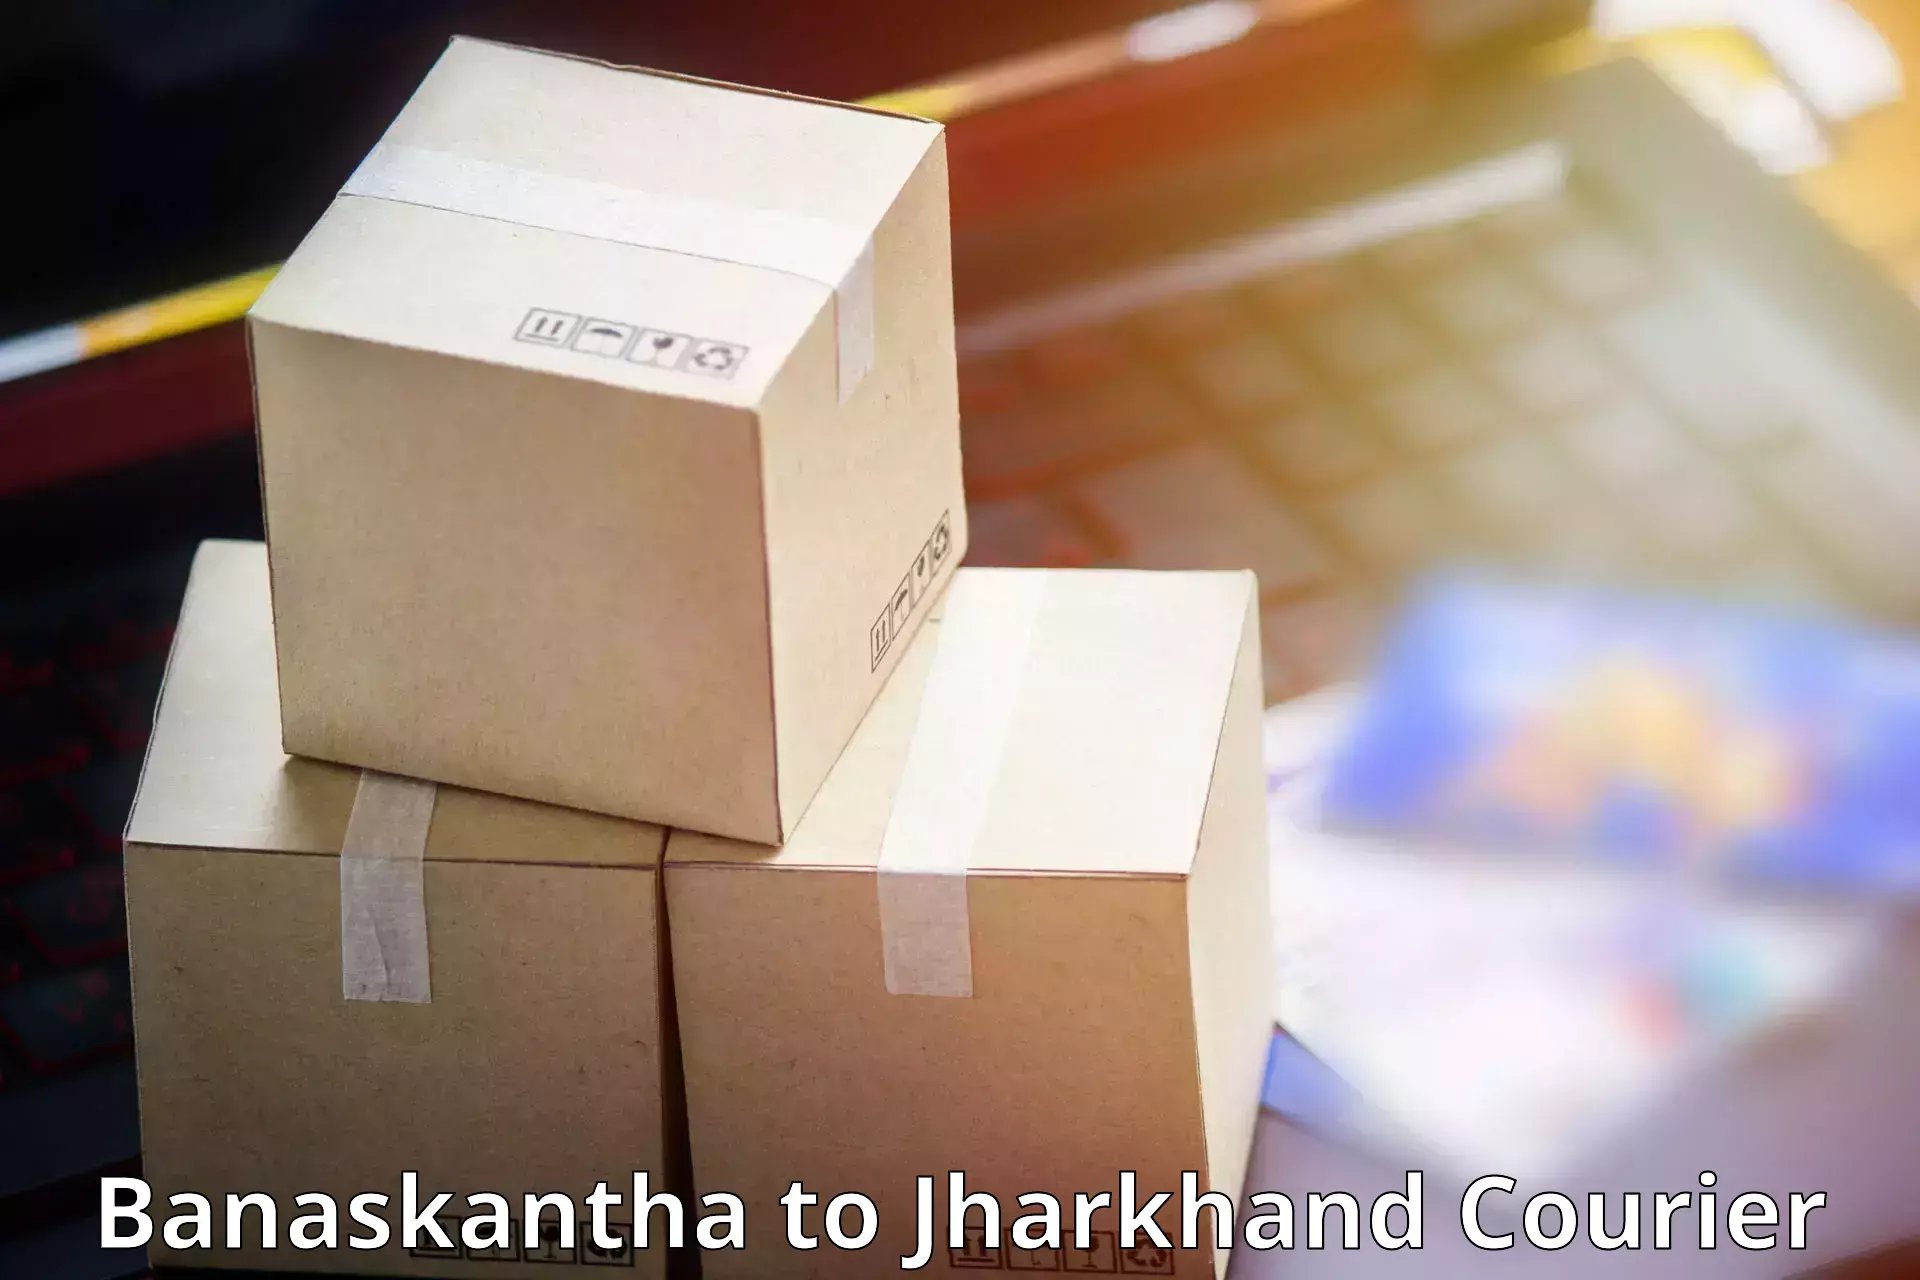 Urgent courier needs Banaskantha to Latehar